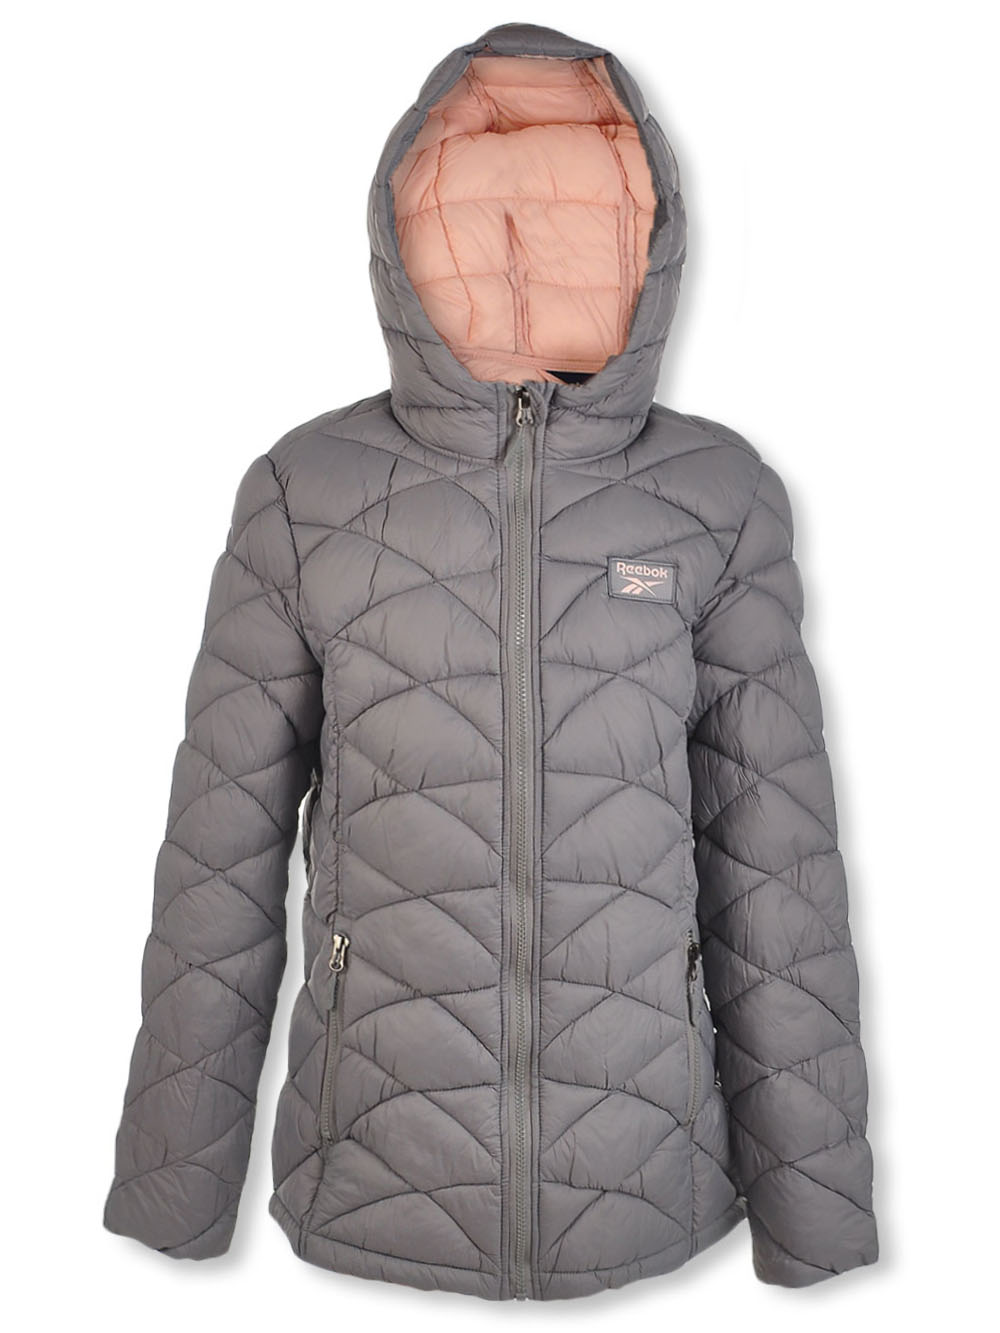 Reebok Girls' Packable Puffer Hooded Jacket - gray, l (Big Girls) - image 3 of 3